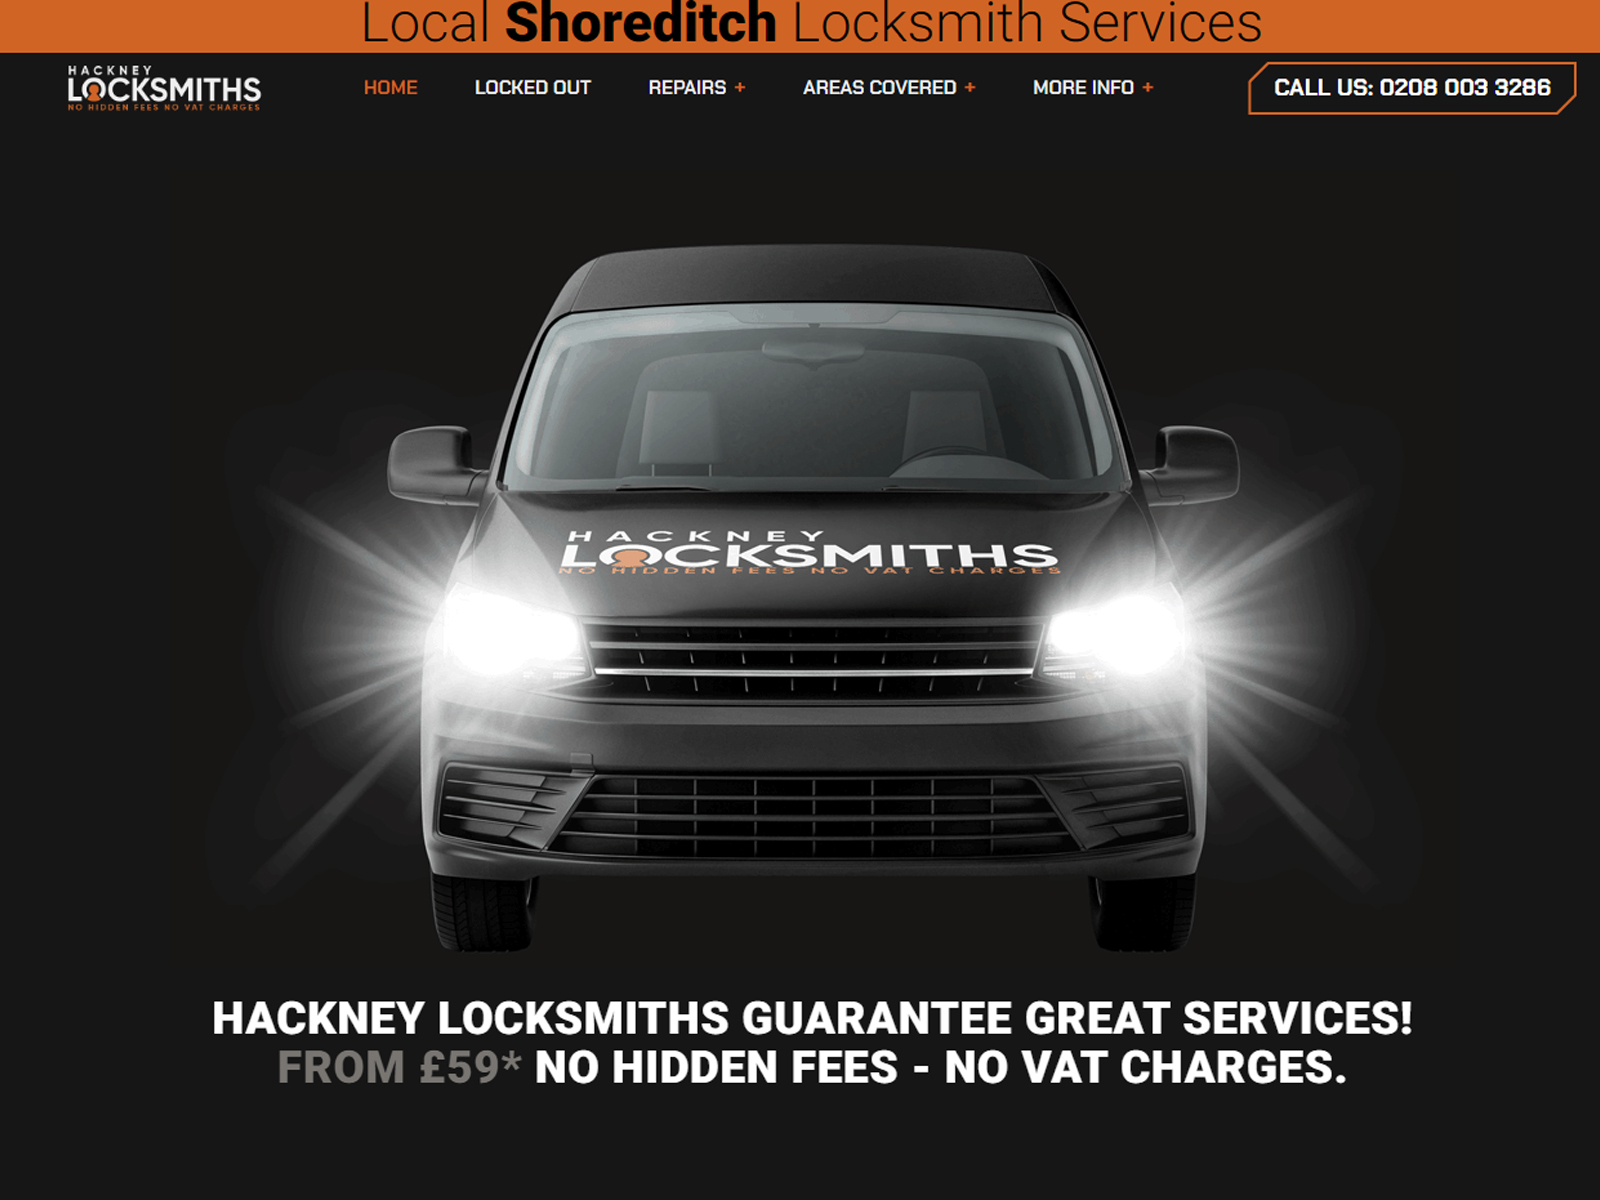 Hackney Locksmith Services